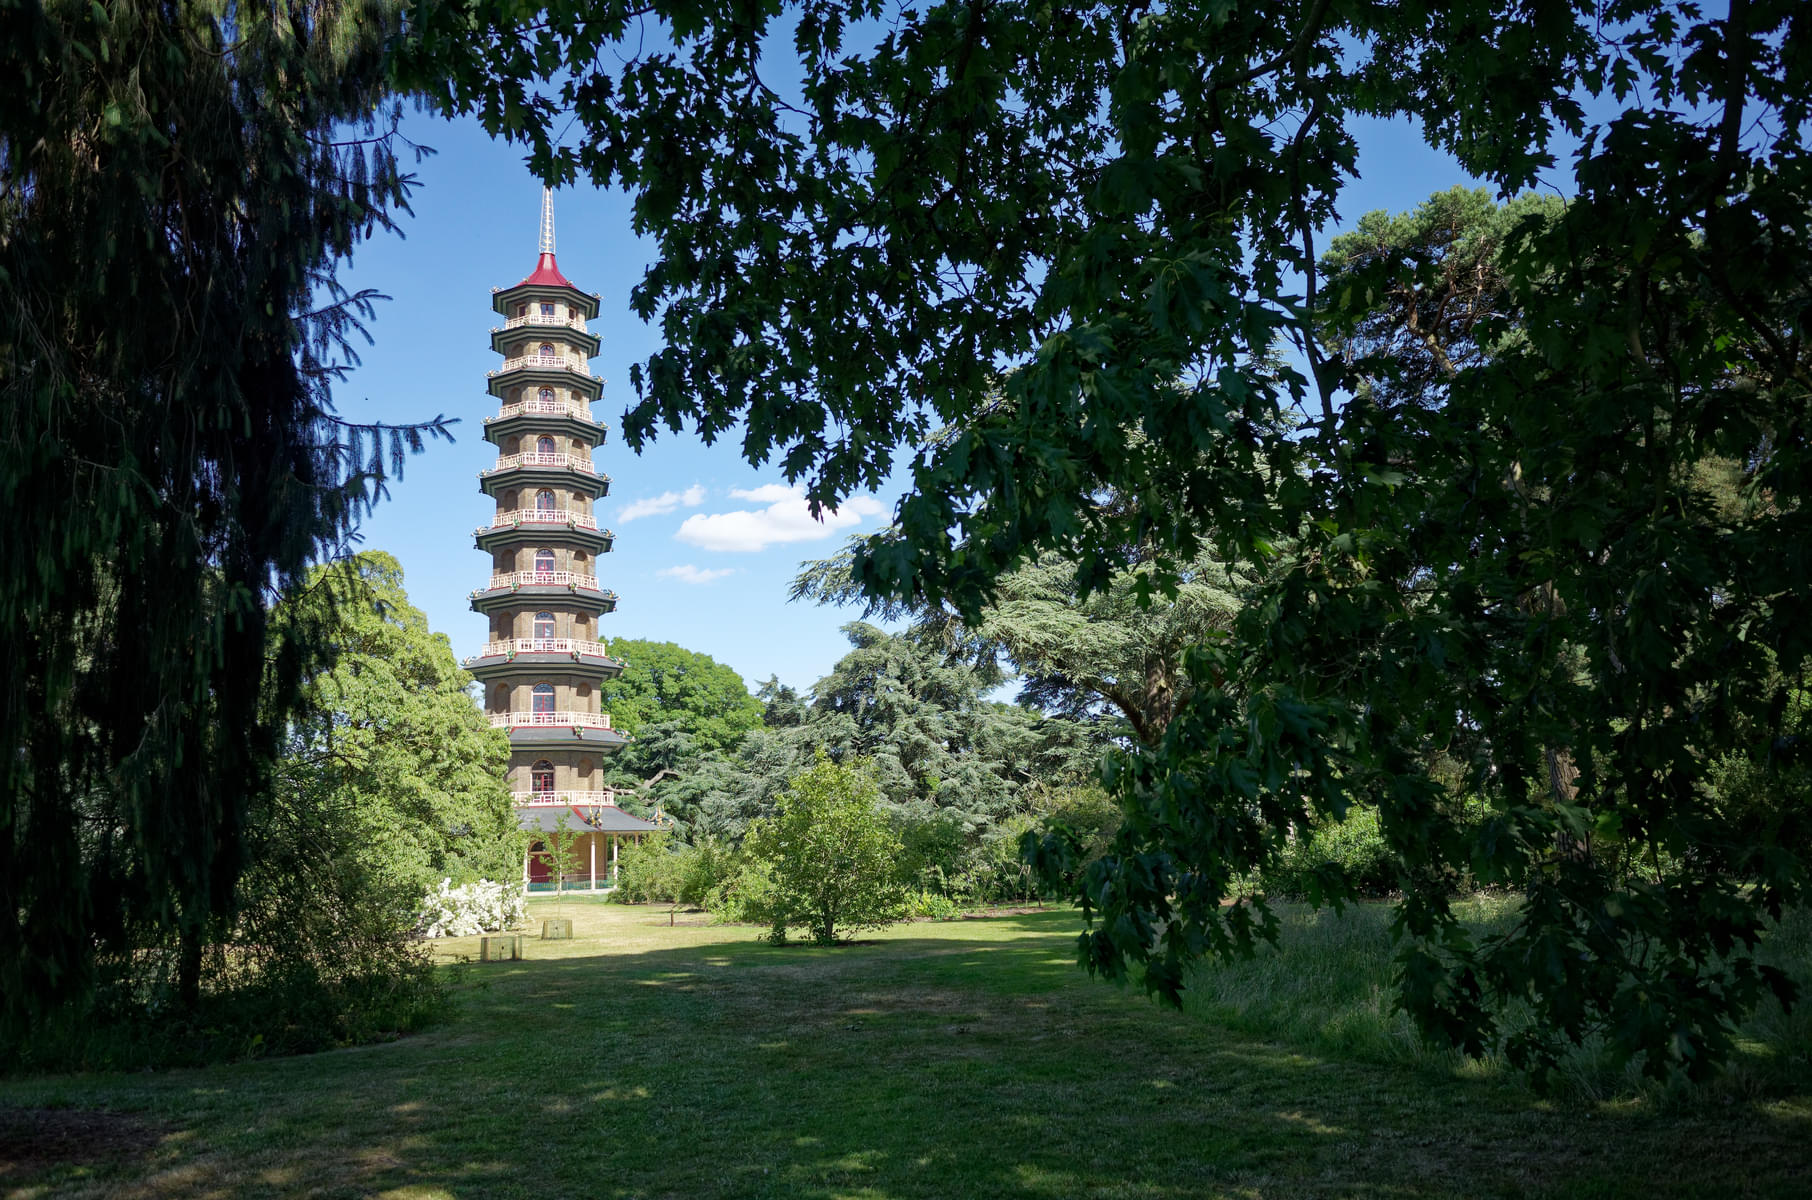 Highlights Of Kew Gardens Great Pagoda